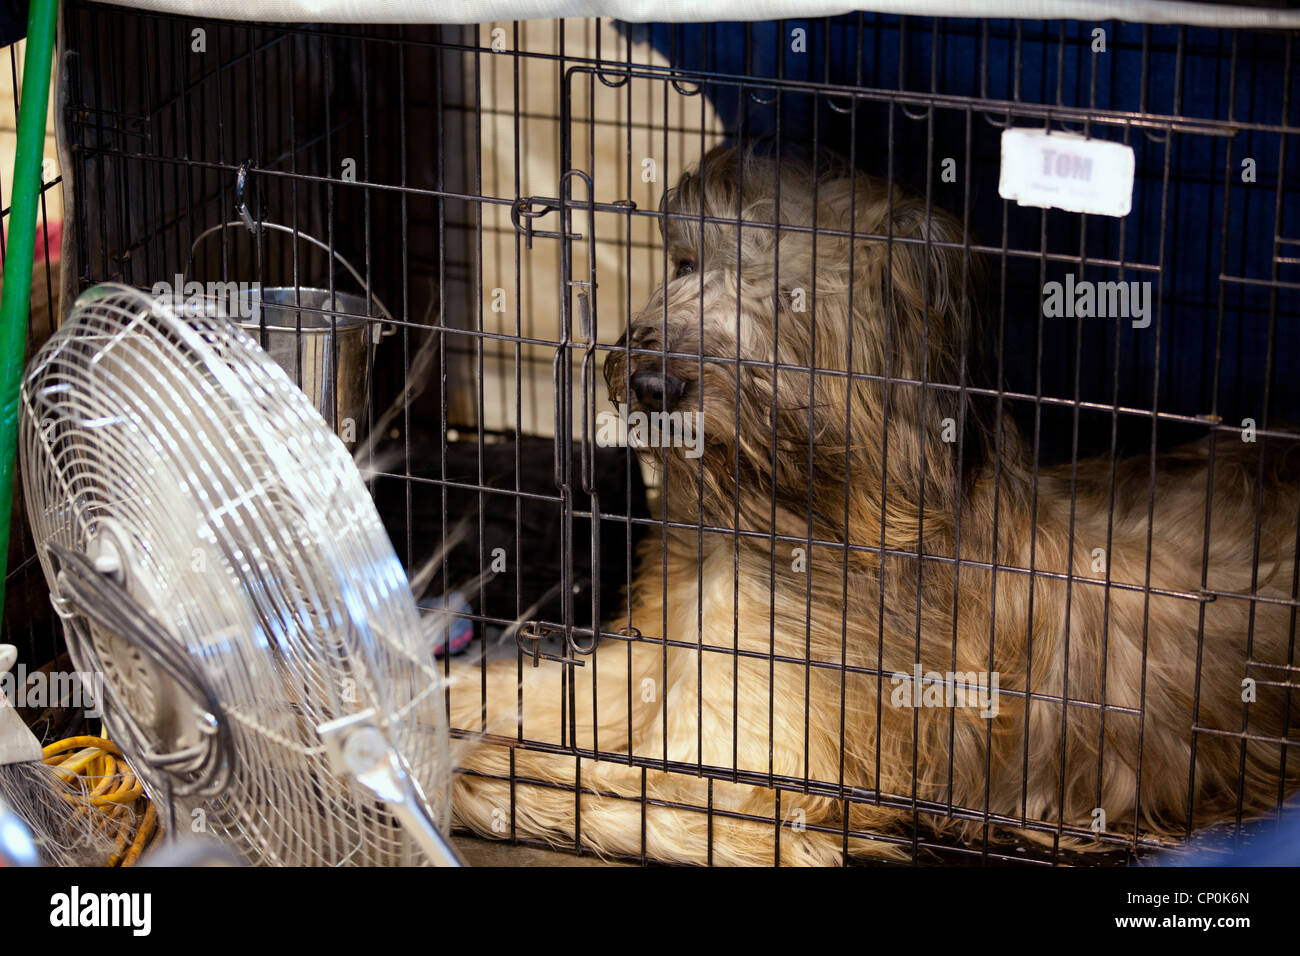 American Kennel Club, AKC show à Chicago Banque D'Images